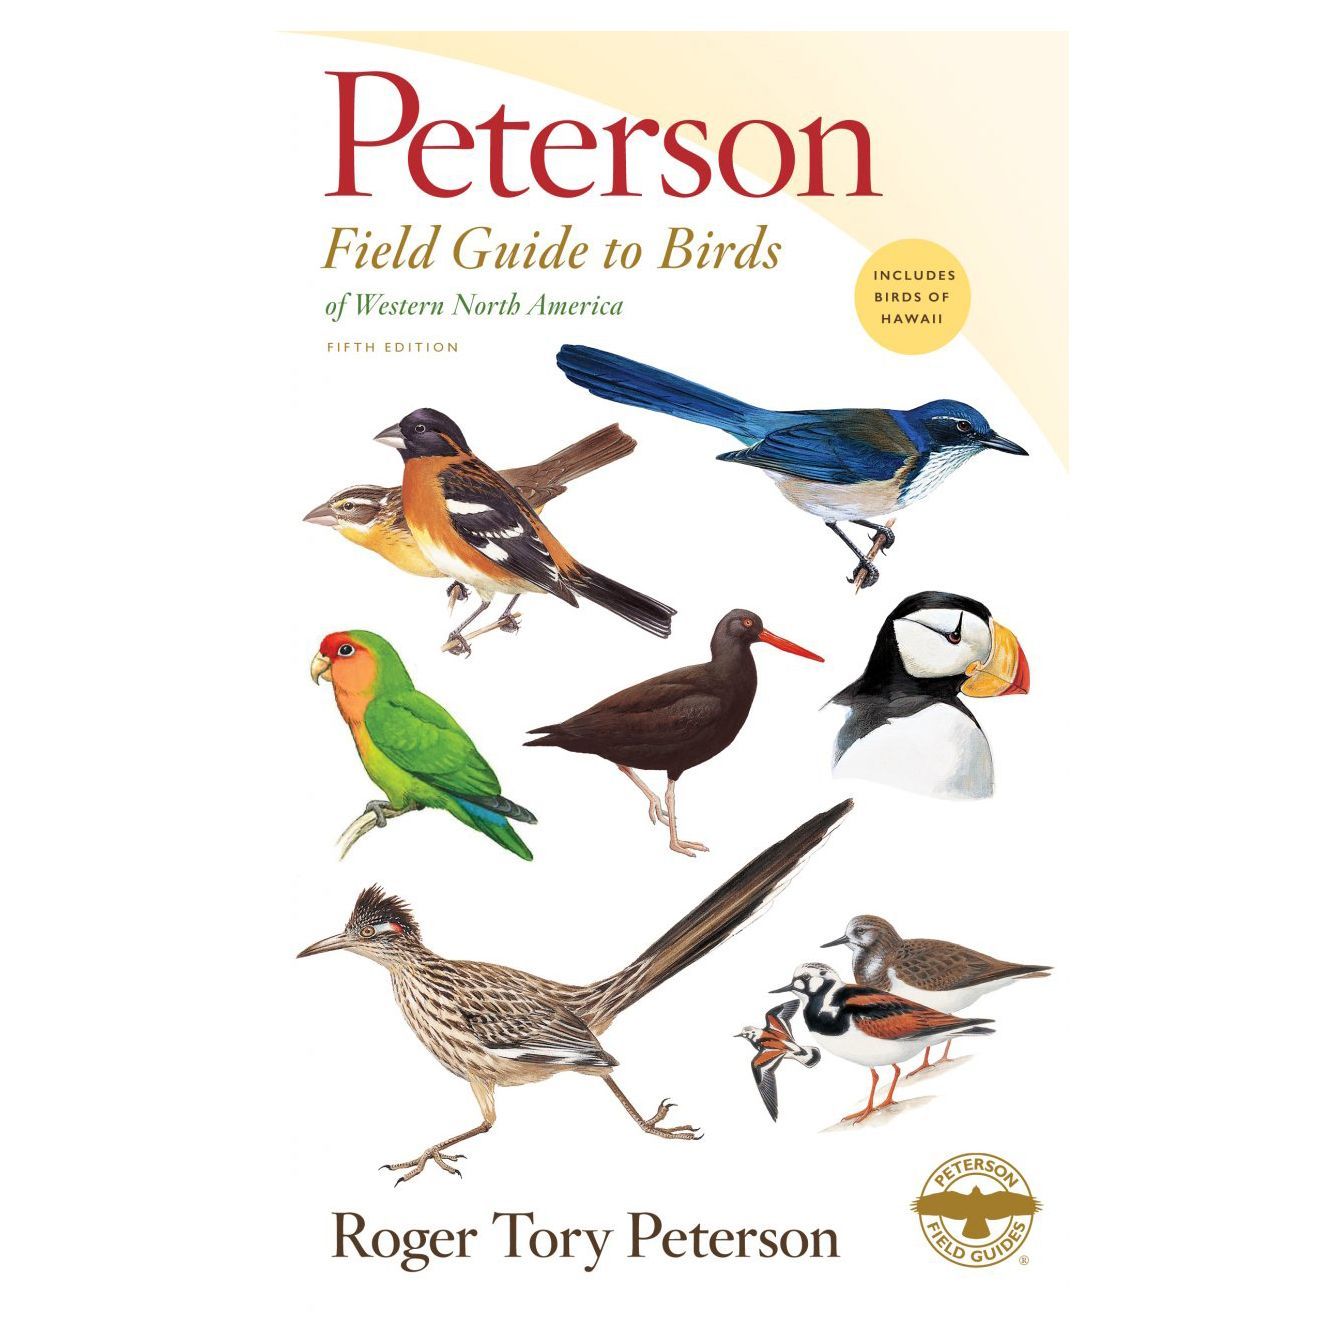 Peterson Field Guide